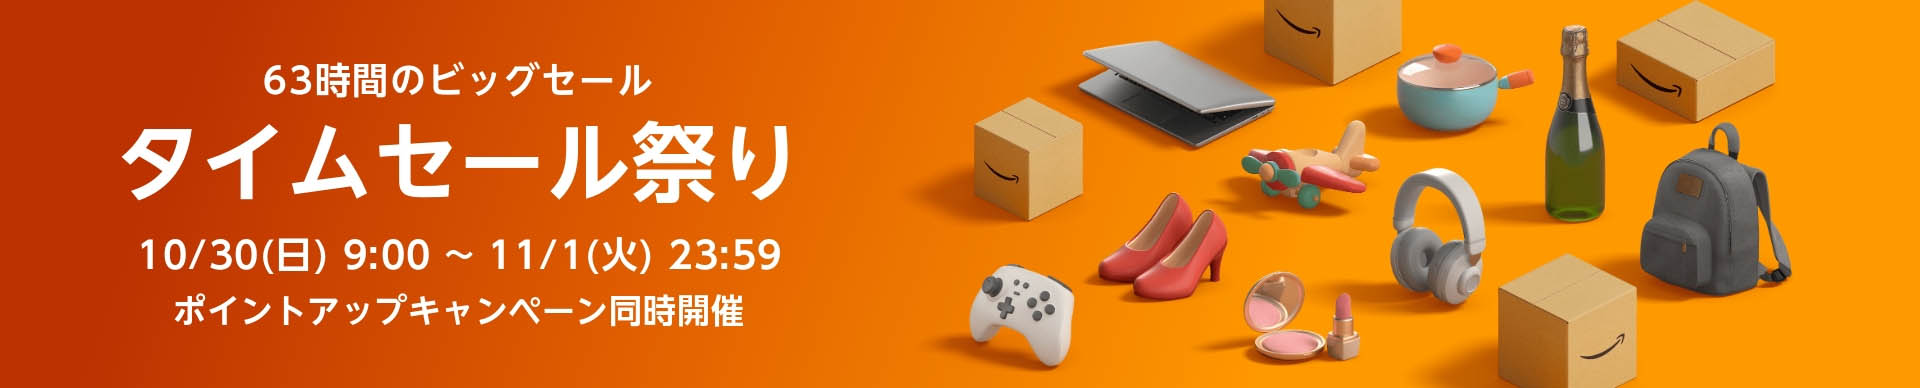 Amazon，63時間限定の「タイムセール祭り」開催中。「PlayStation VR